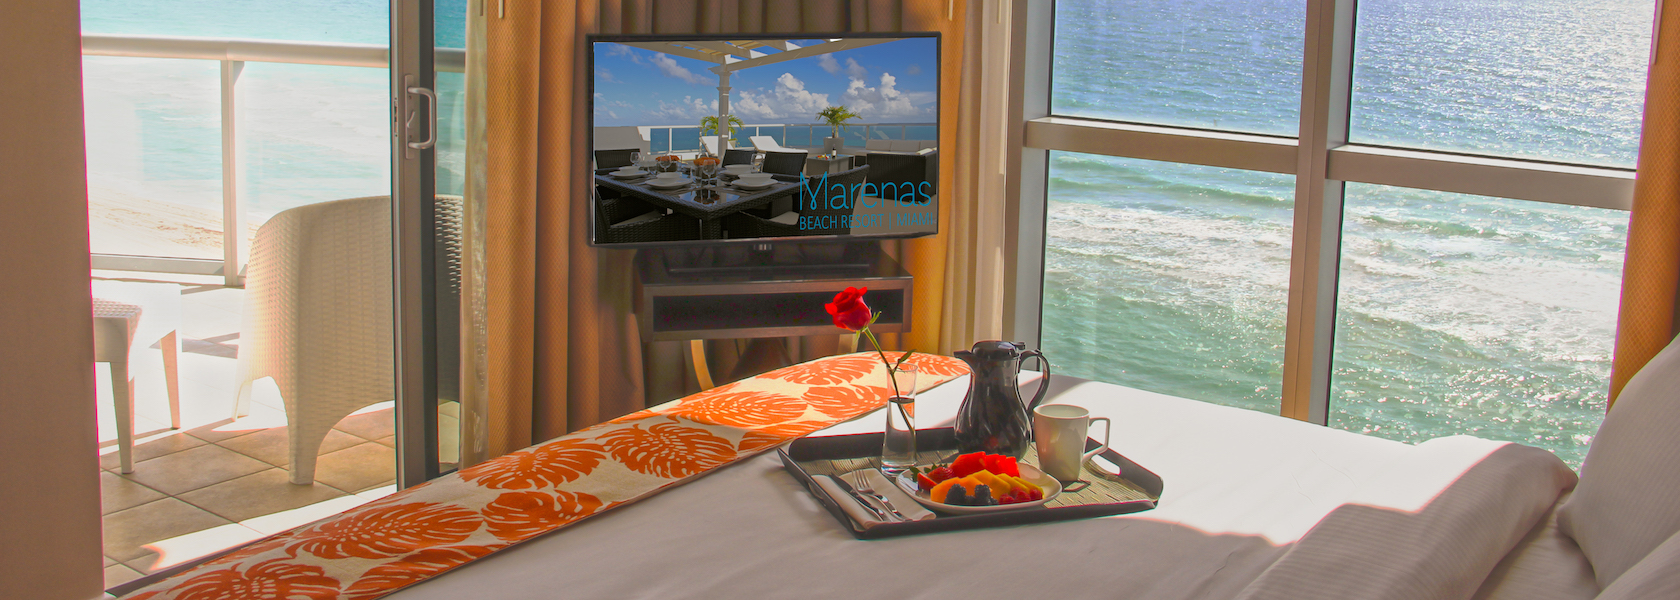 Breakfast tray on bed with ocean view in Marenas Beach Resort hotel room